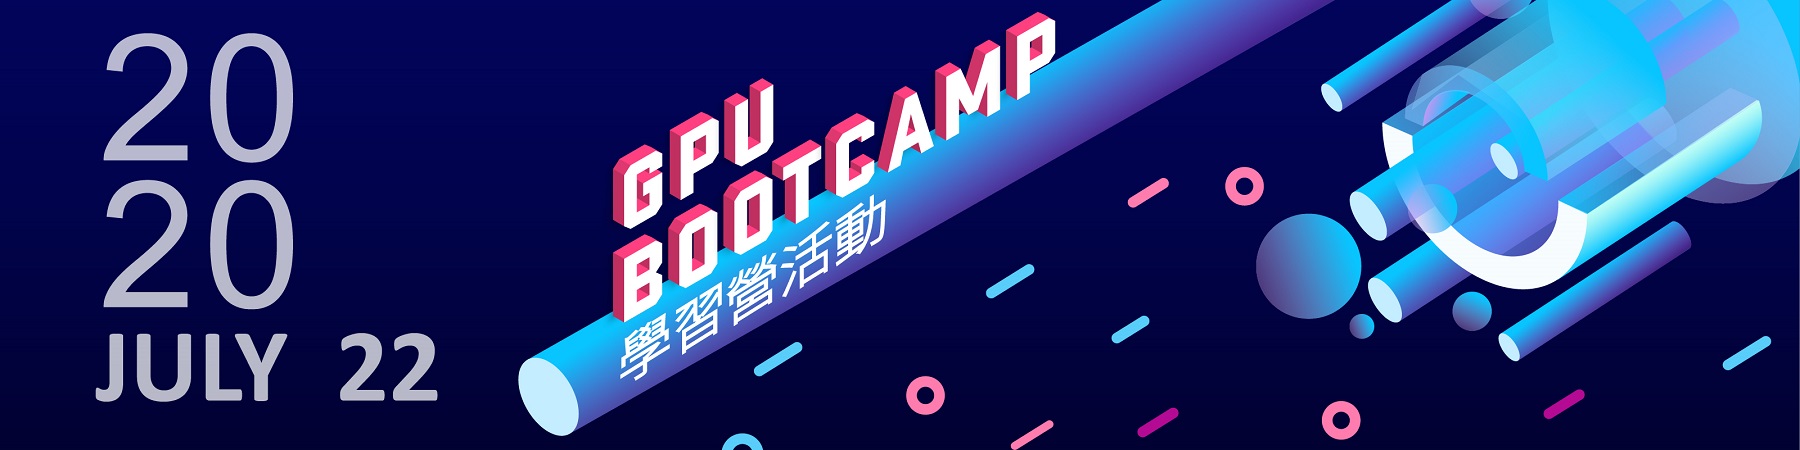 GPU bootcamp訓練營將於7月22日舉辦